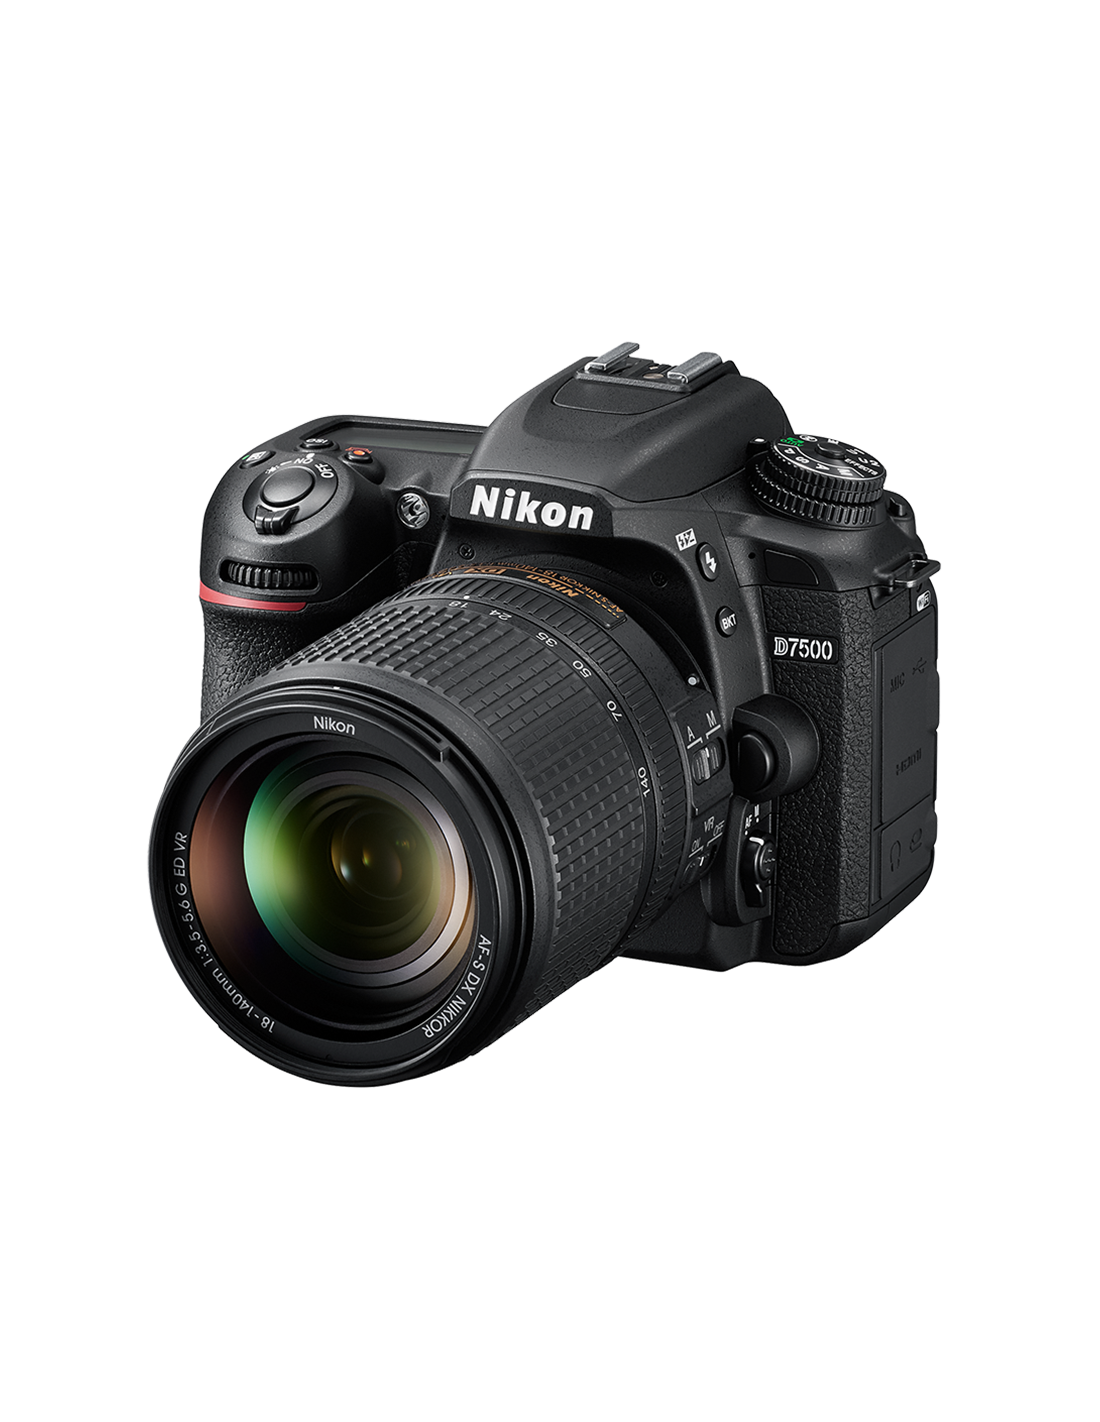  Nikon, D7500 DX-Format Digital SLR, carcasa : Electrónica